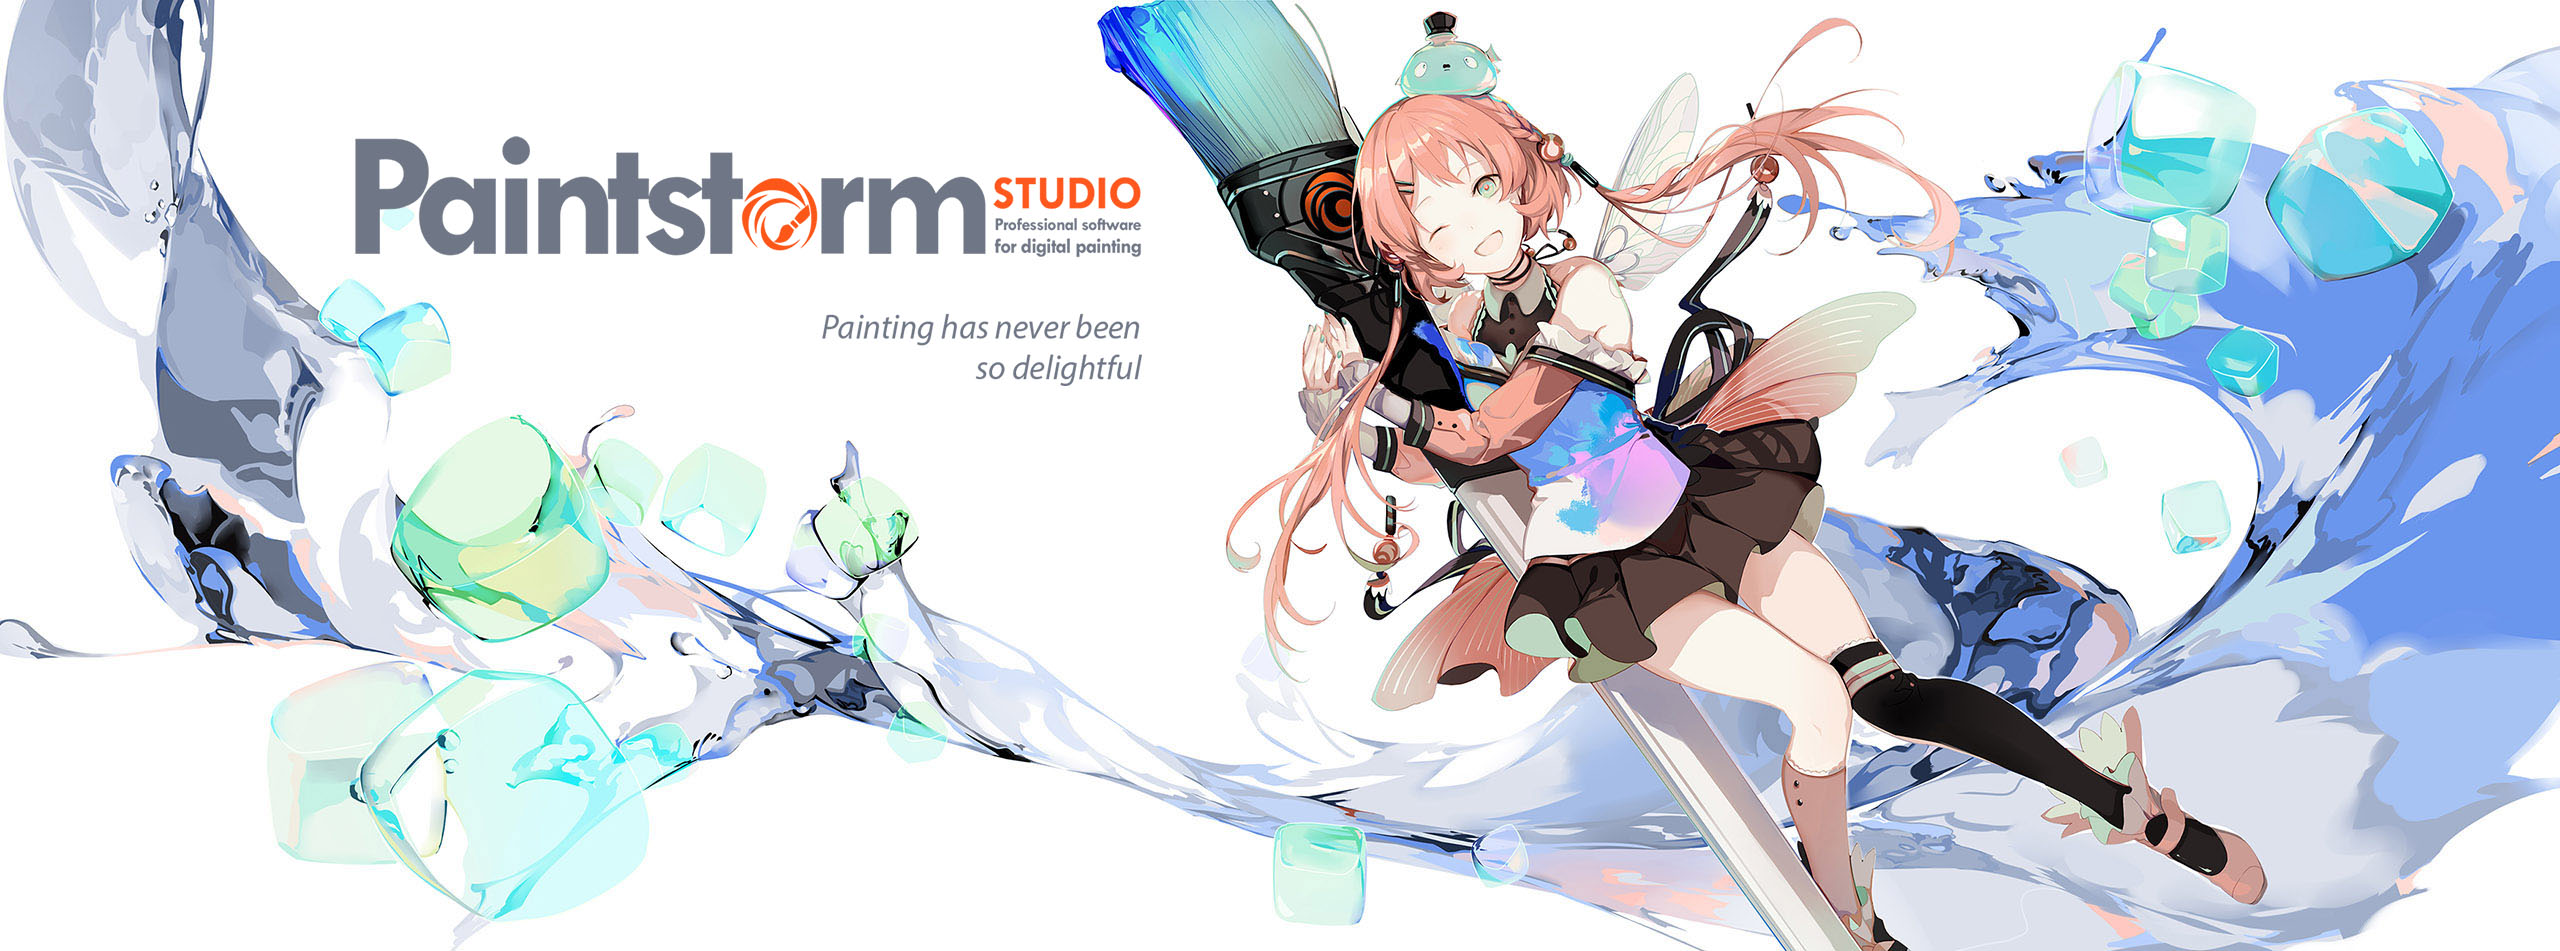 Paintstorm Studio | Professional software for digital painting